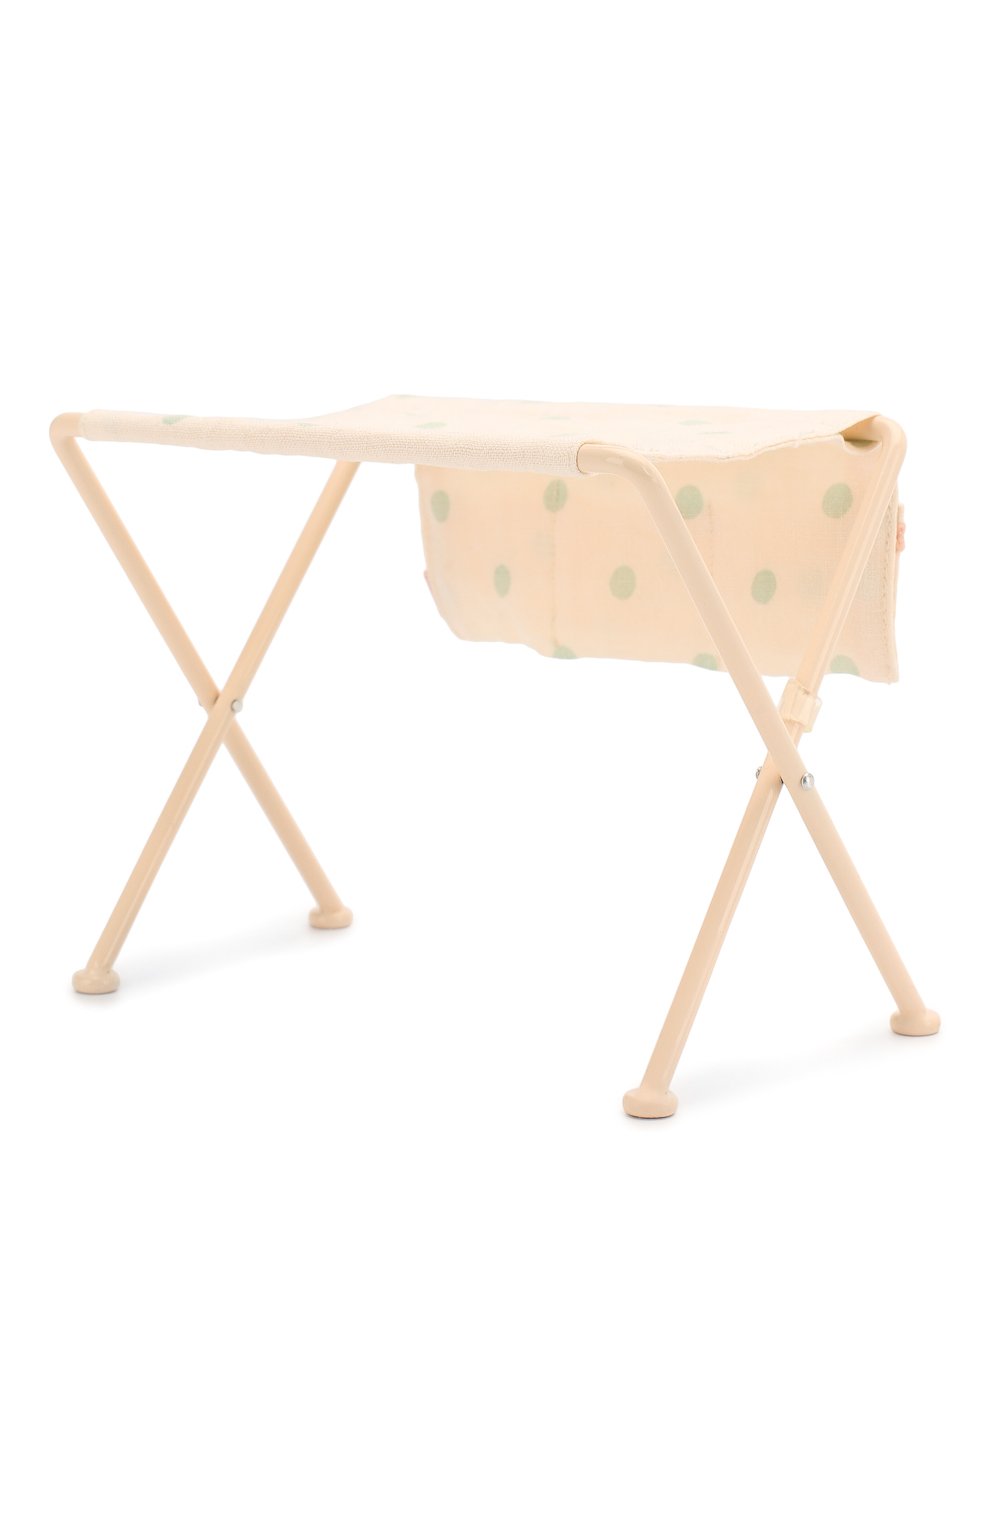 Стол для пеленания ребенка